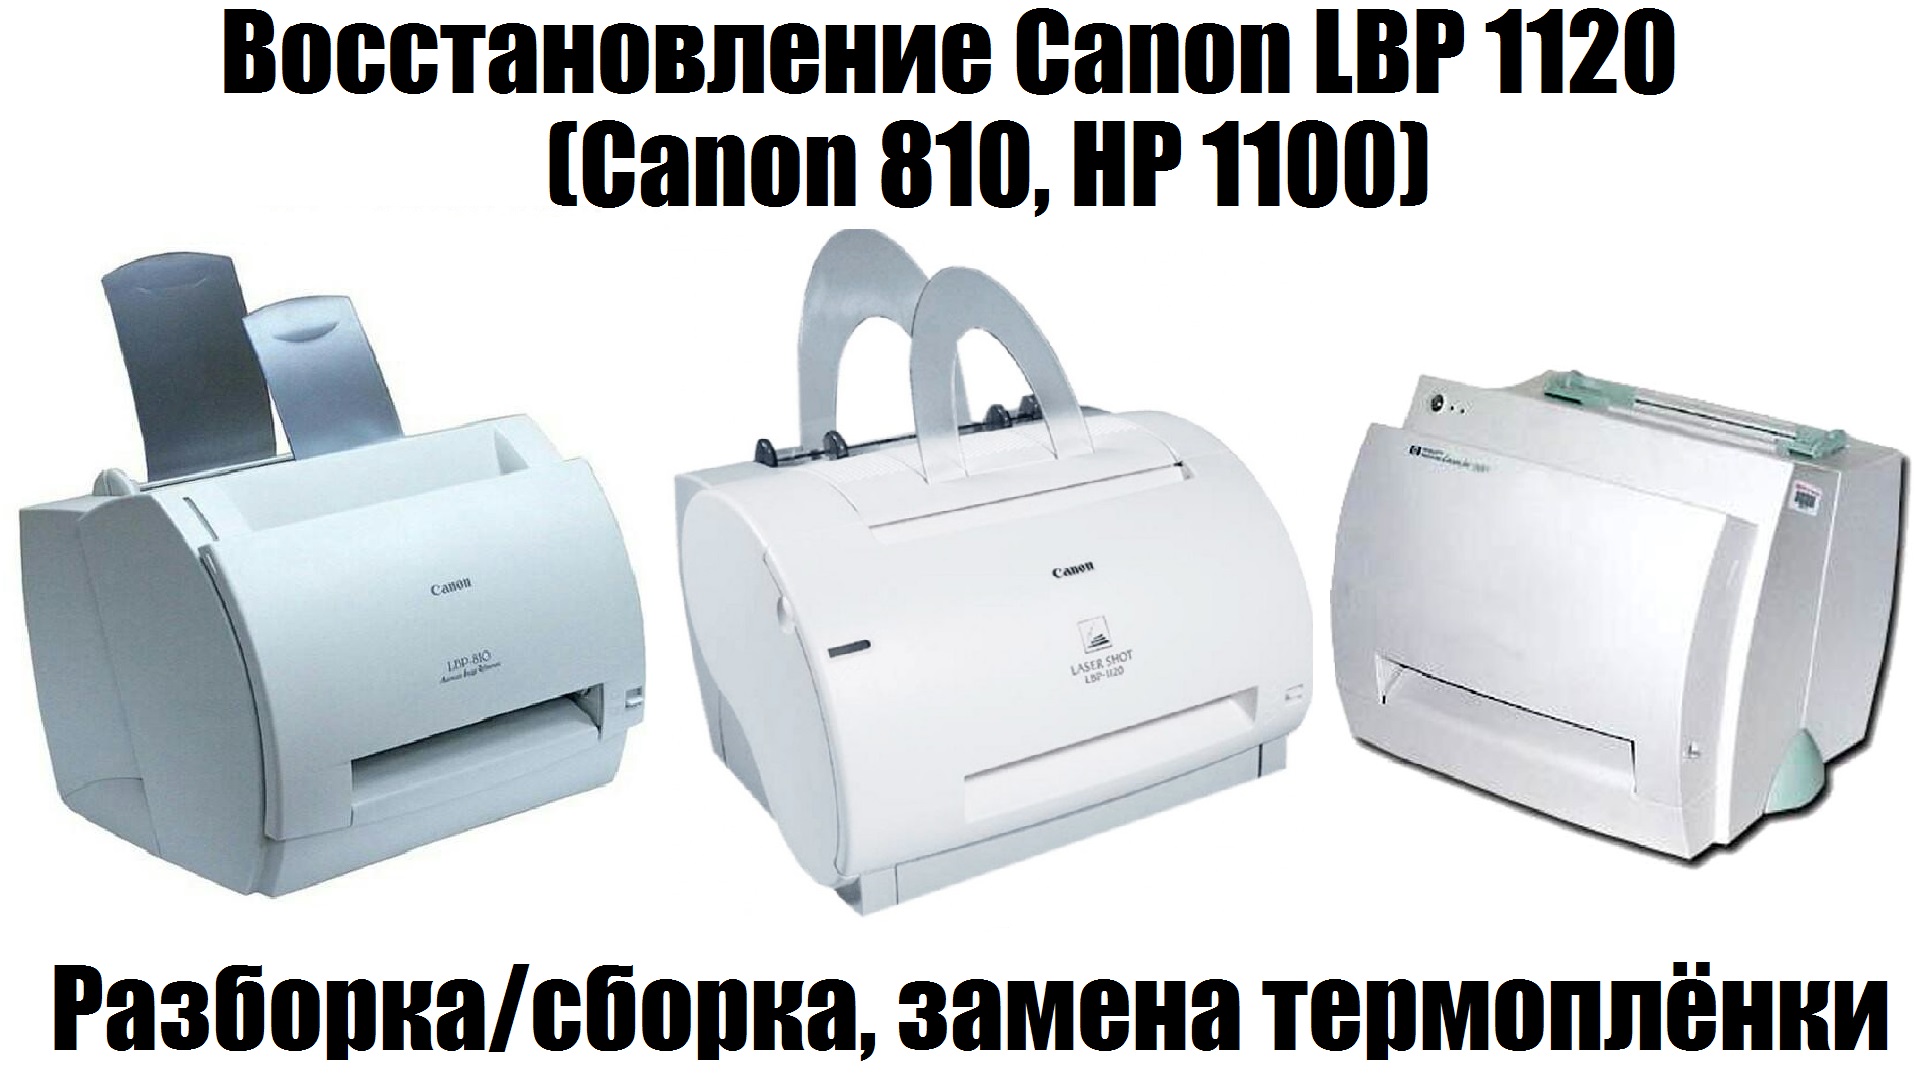 Canon lbp 810 драйвера x64. Принтер Canon LBP-1120. Принтер LBP 1120. Принтер Canon 1120. Принтер Canon LBP-810.